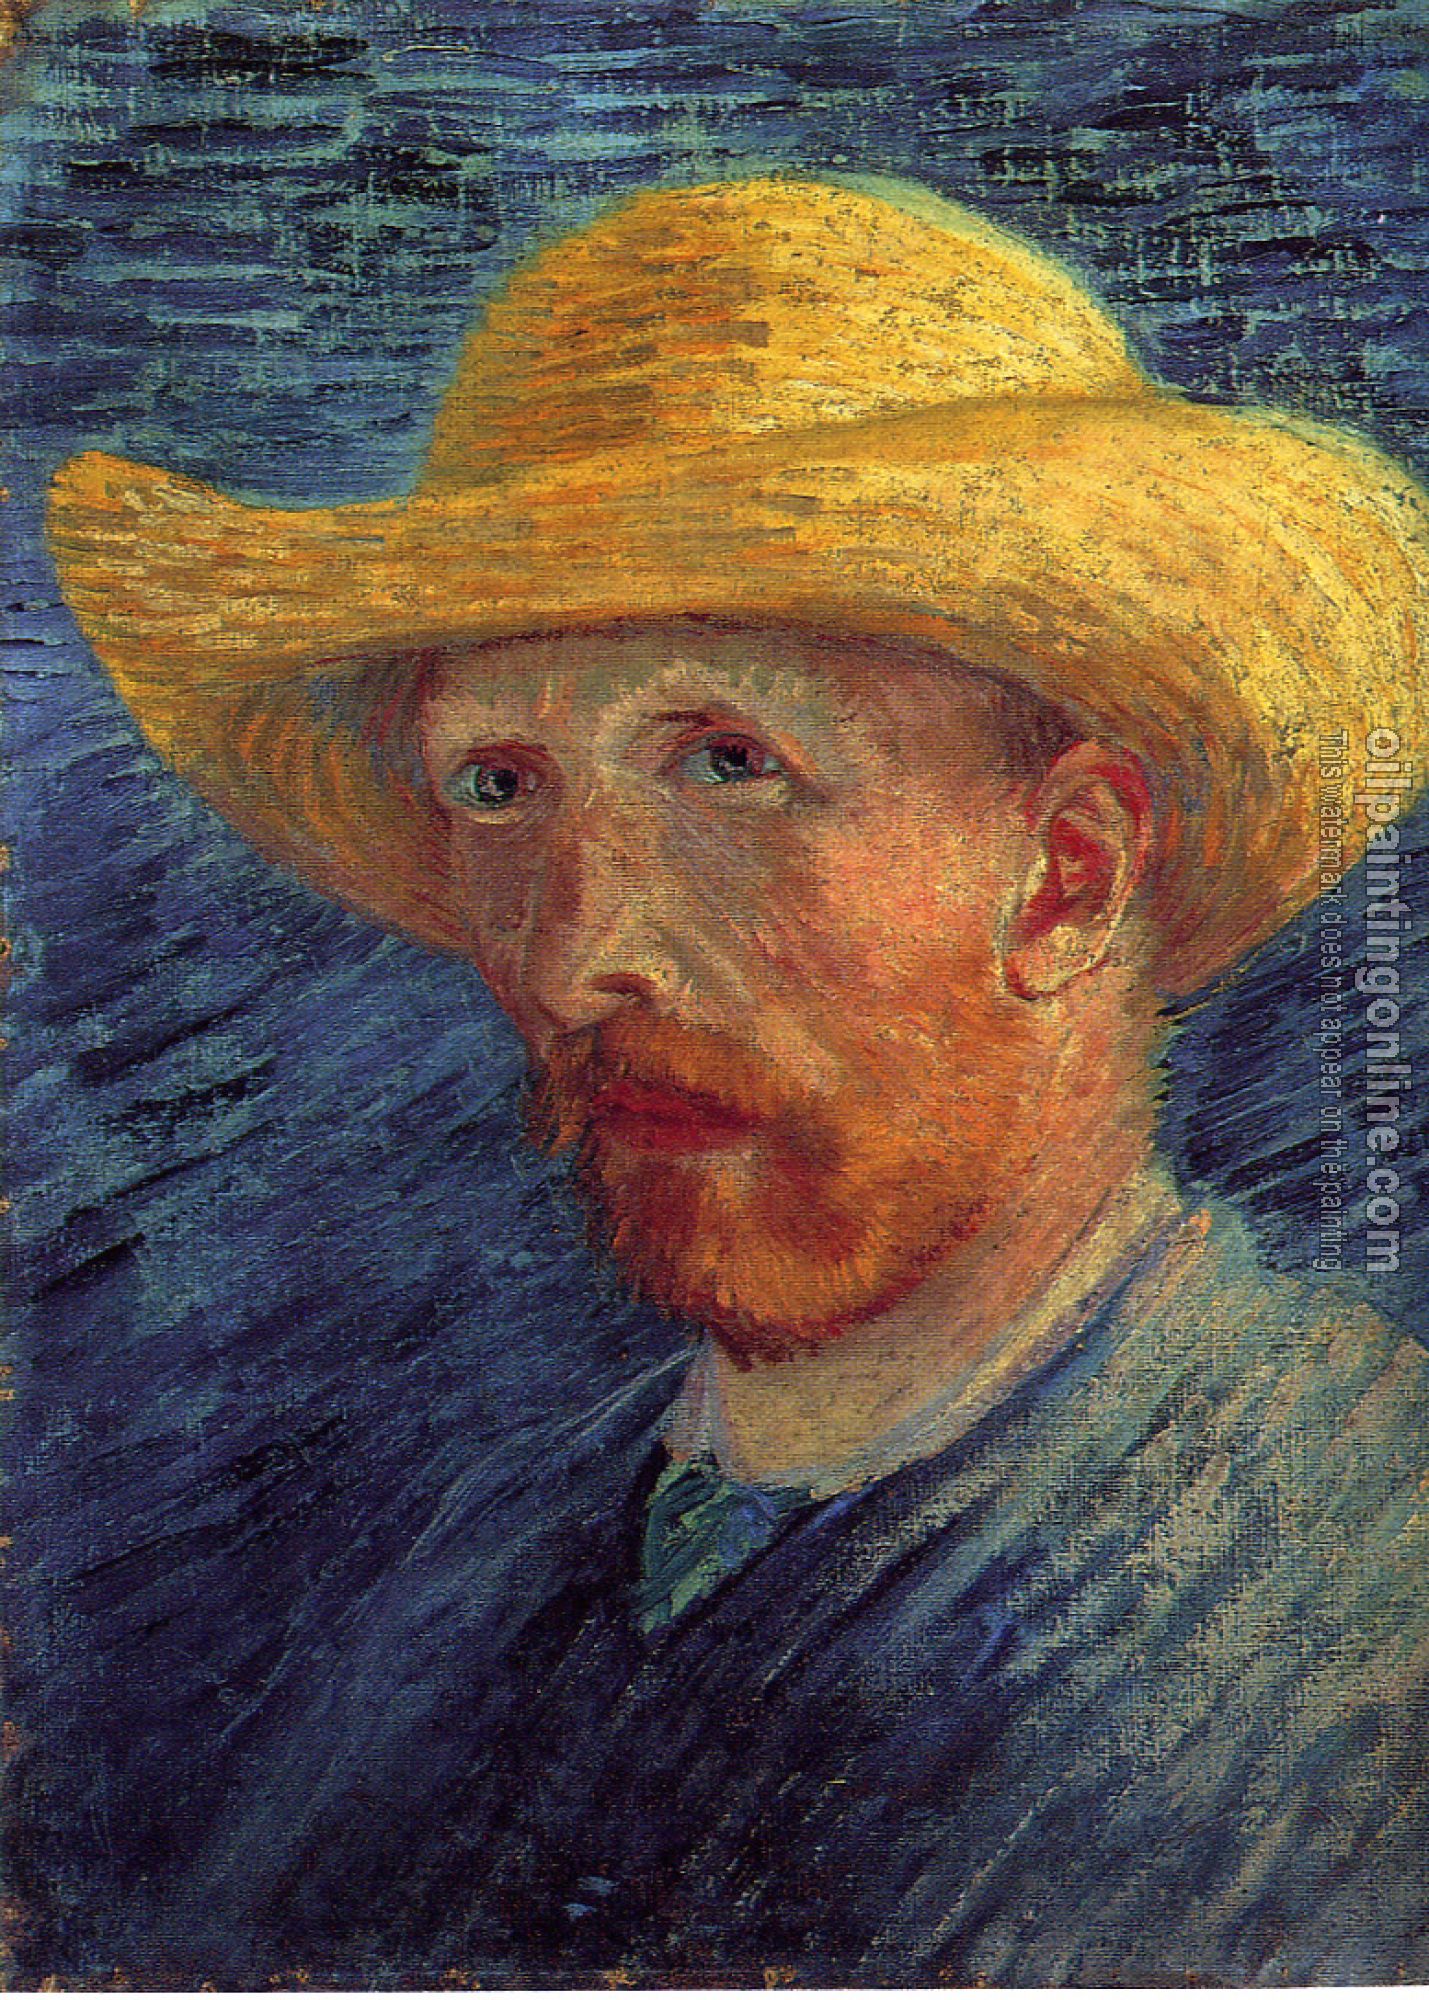 Gogh, Vincent van - Self-Portrait with Straw Hat